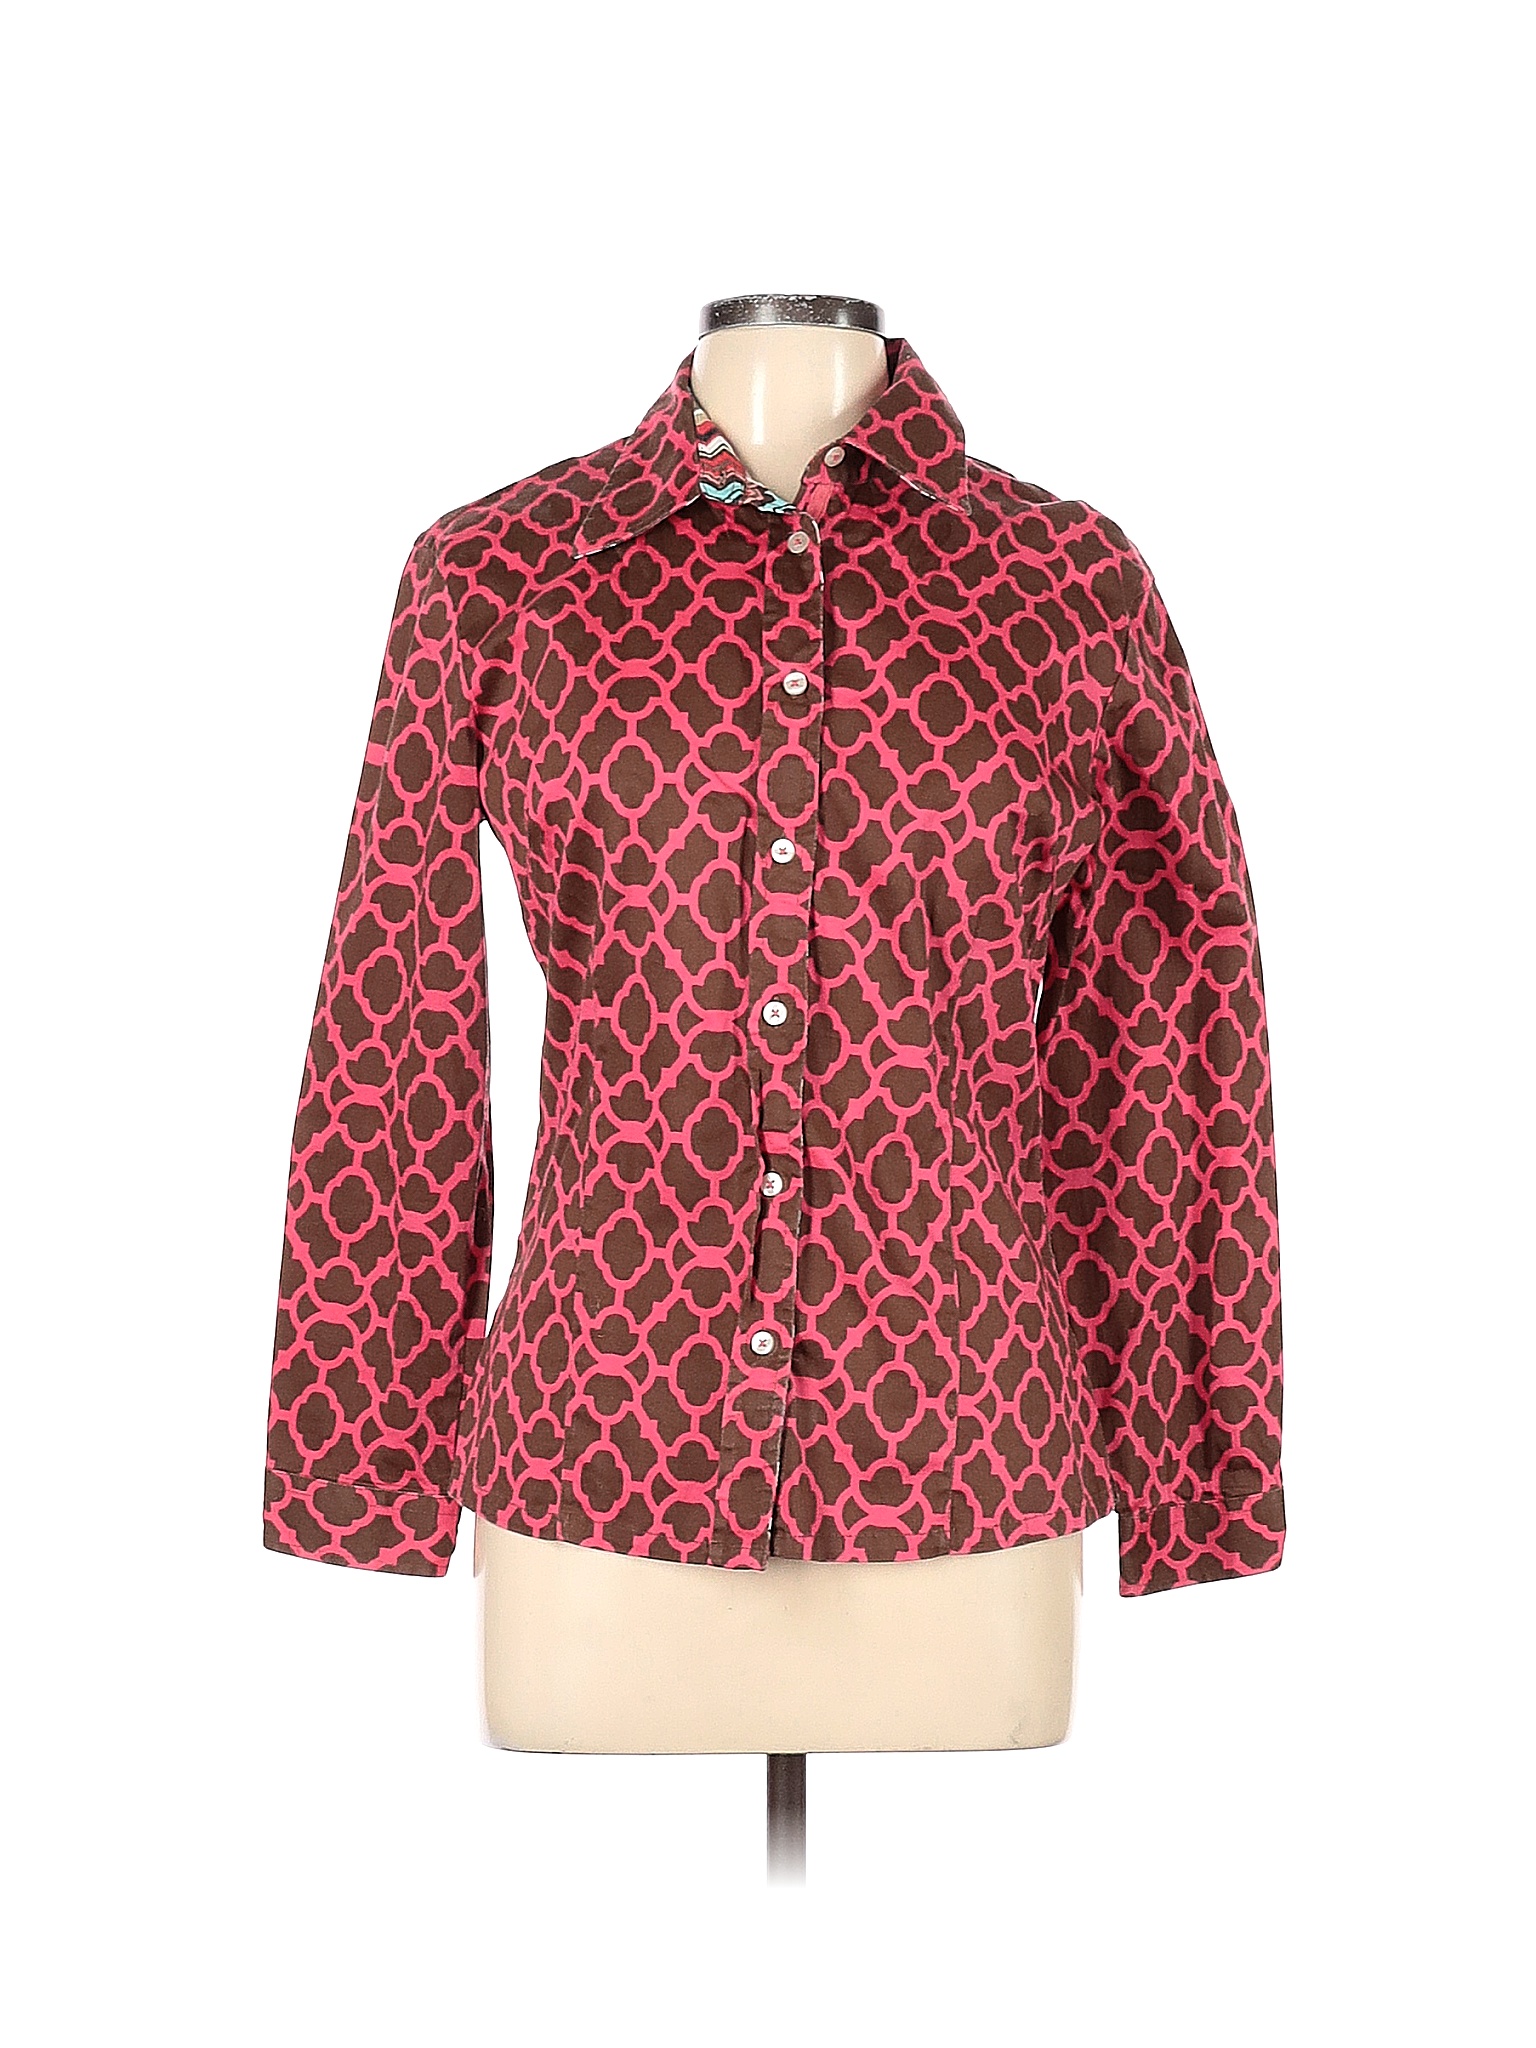 Tizzie Pink Long Sleeve Button-Down Shirt Size L - 78% off | thredUP